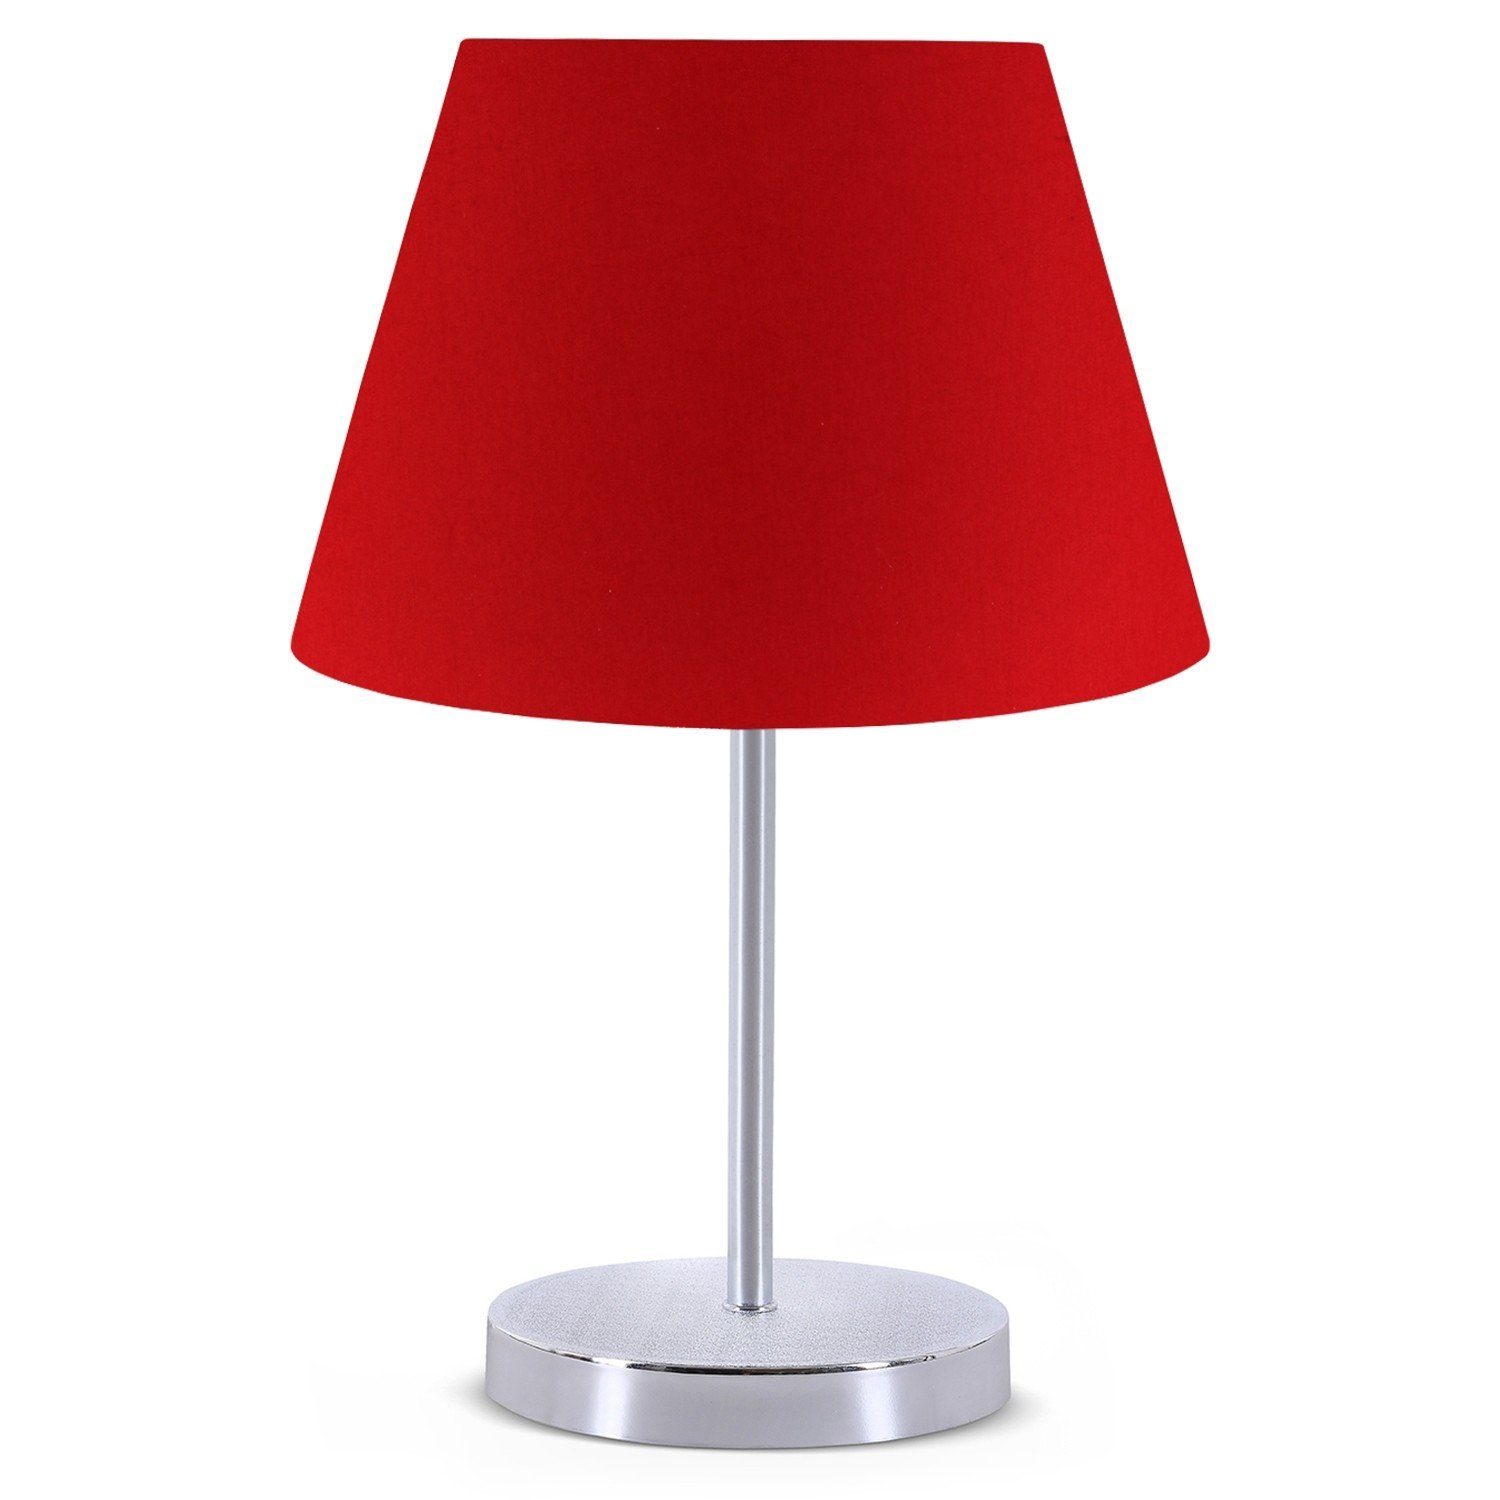 Nachttischlampen, AYD SGN, Nachttischlampe rot, Opviq 100% PVC